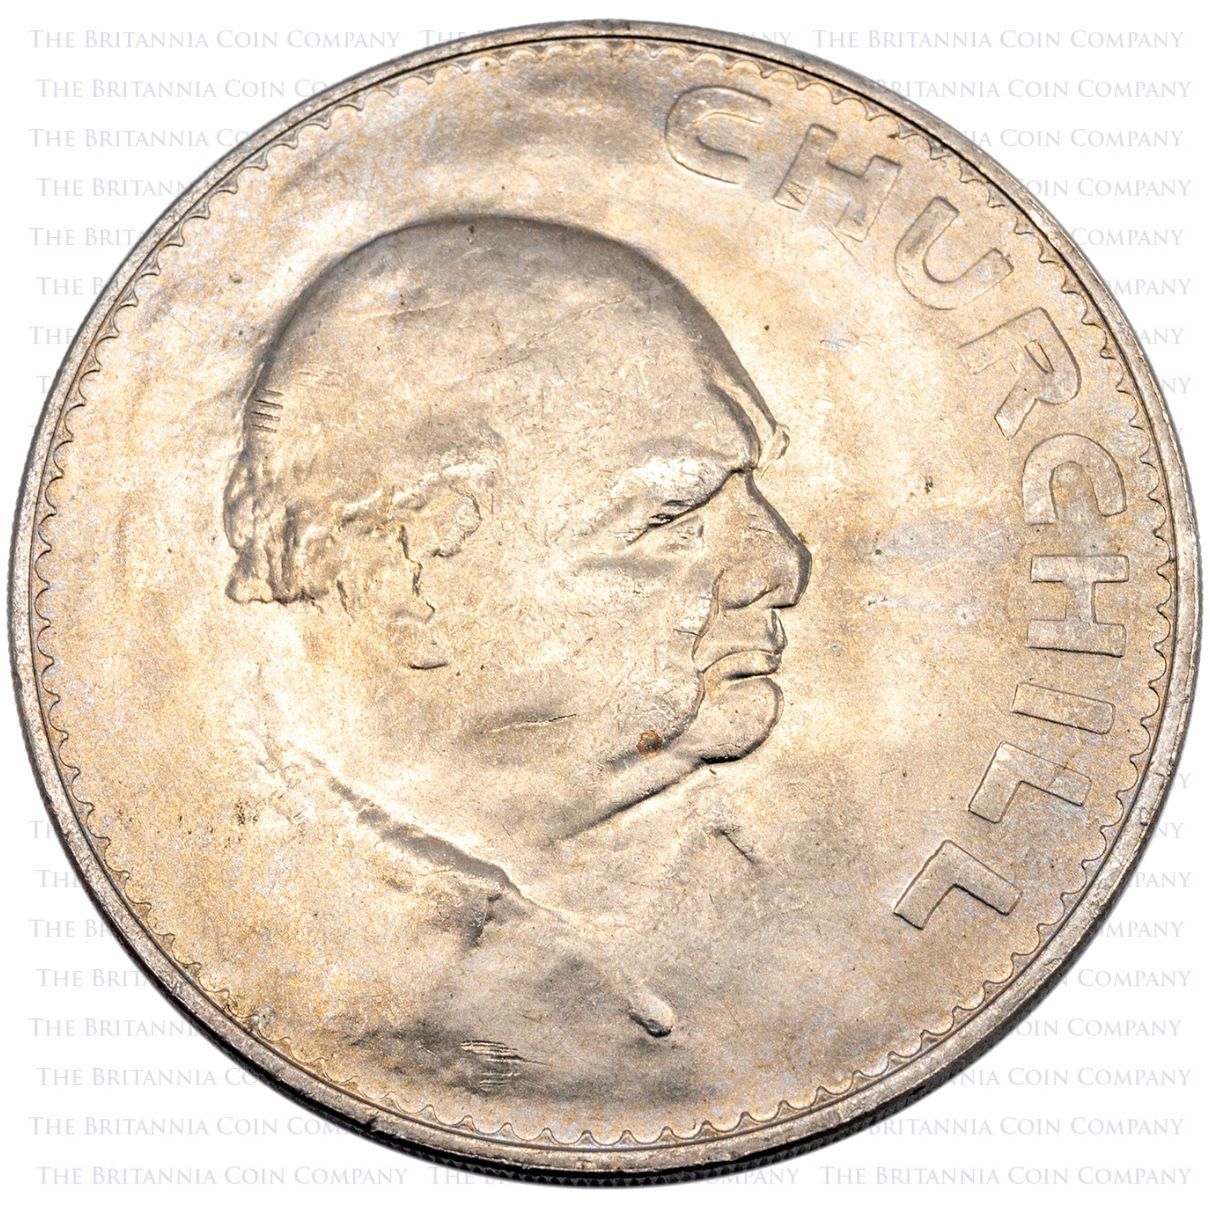 1965 Crown Sir Winston Churchill Queen Elizabeth II Coin Obverse